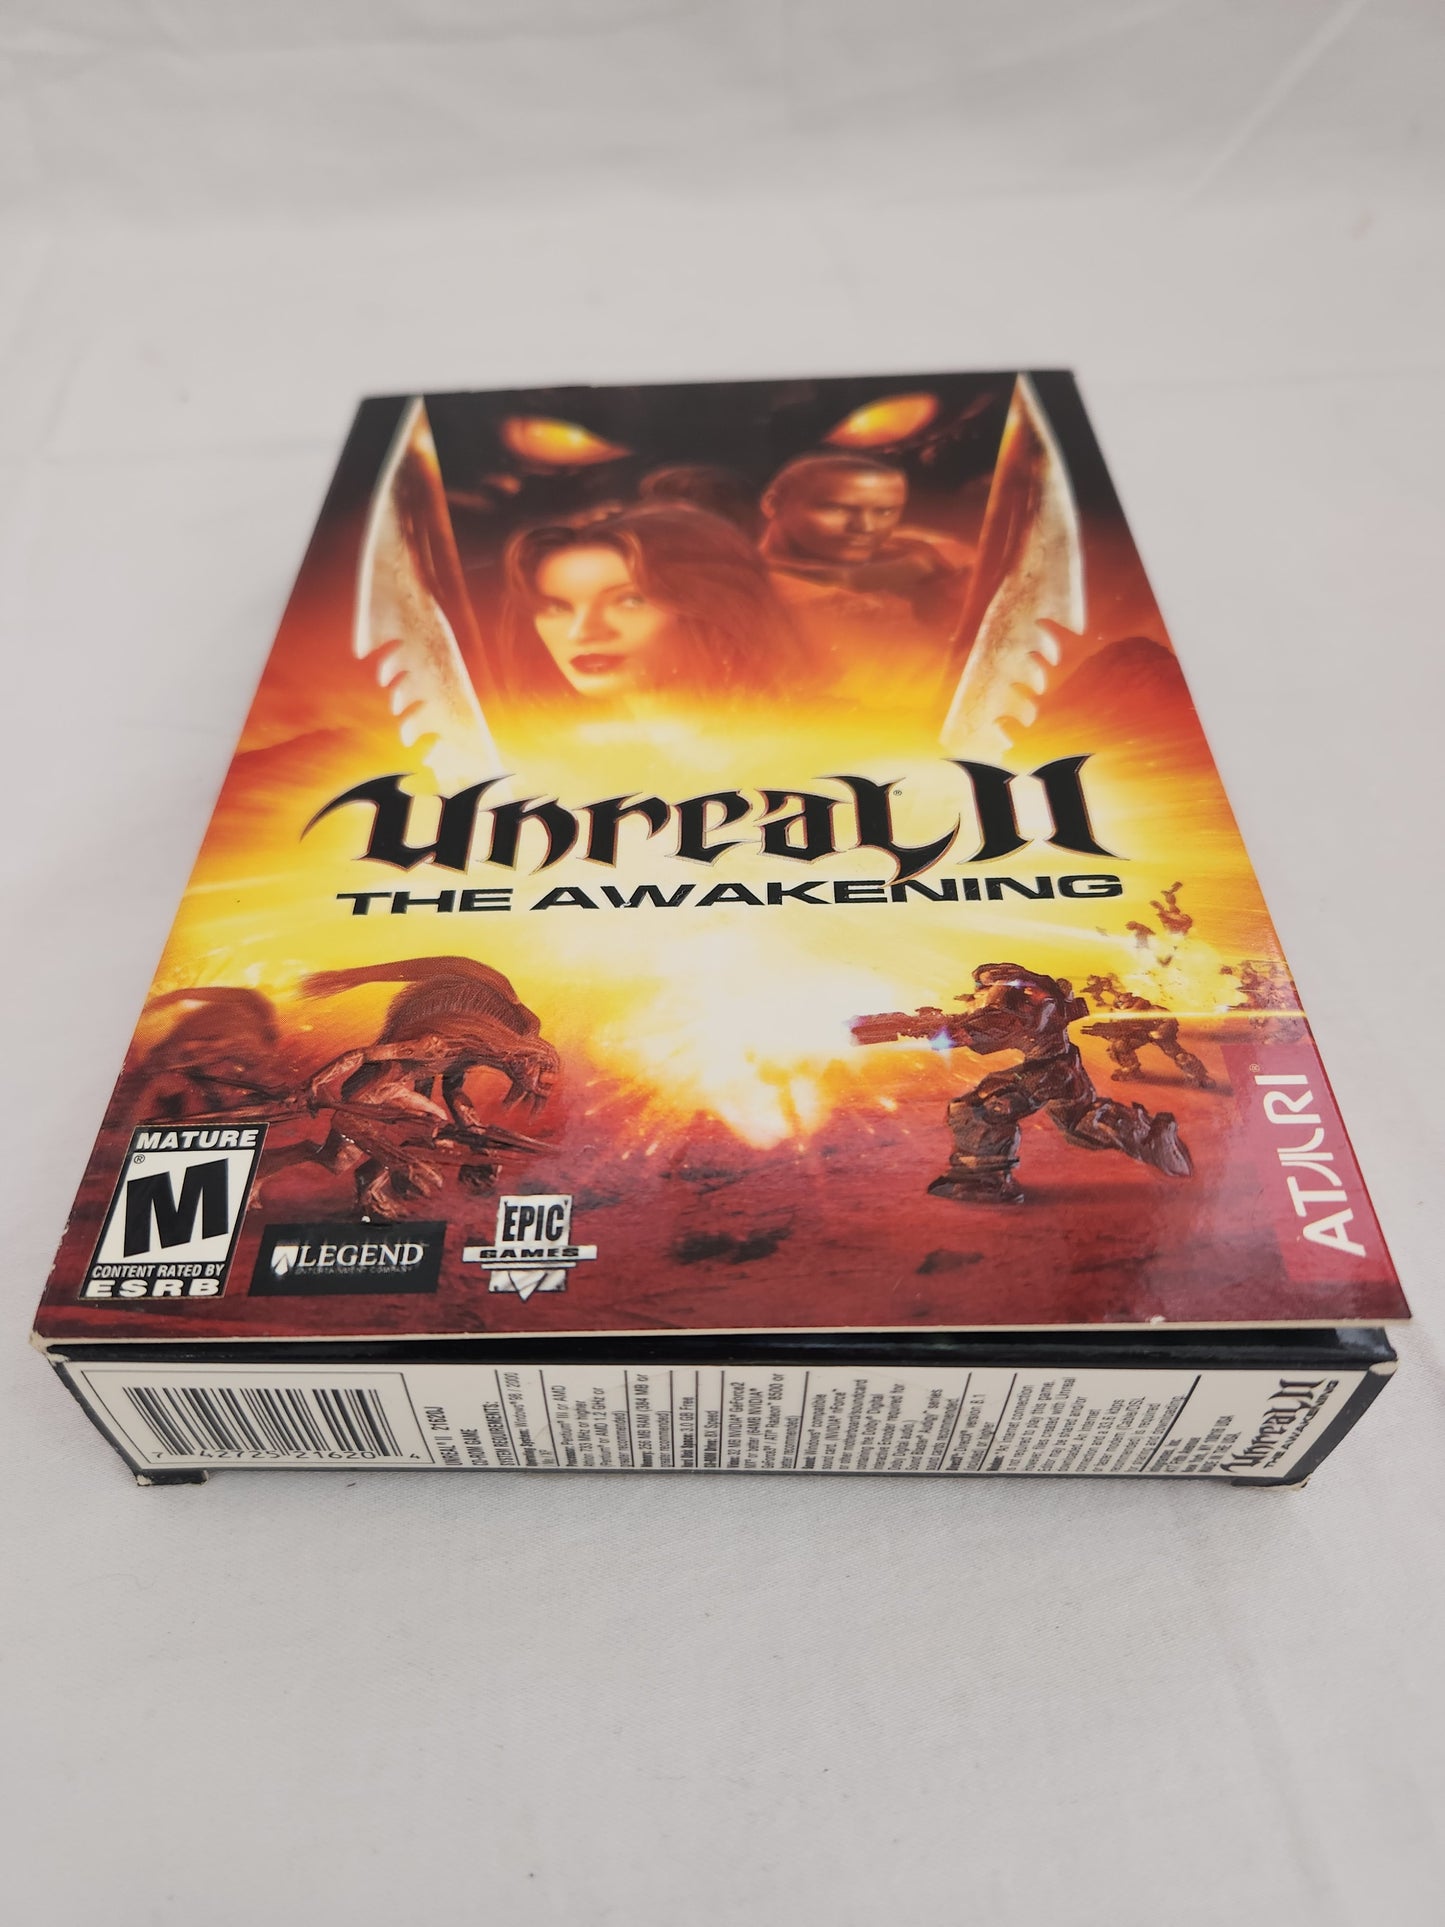 Unreal II: The Awakening PC CD-ROM Game small box - Sealed